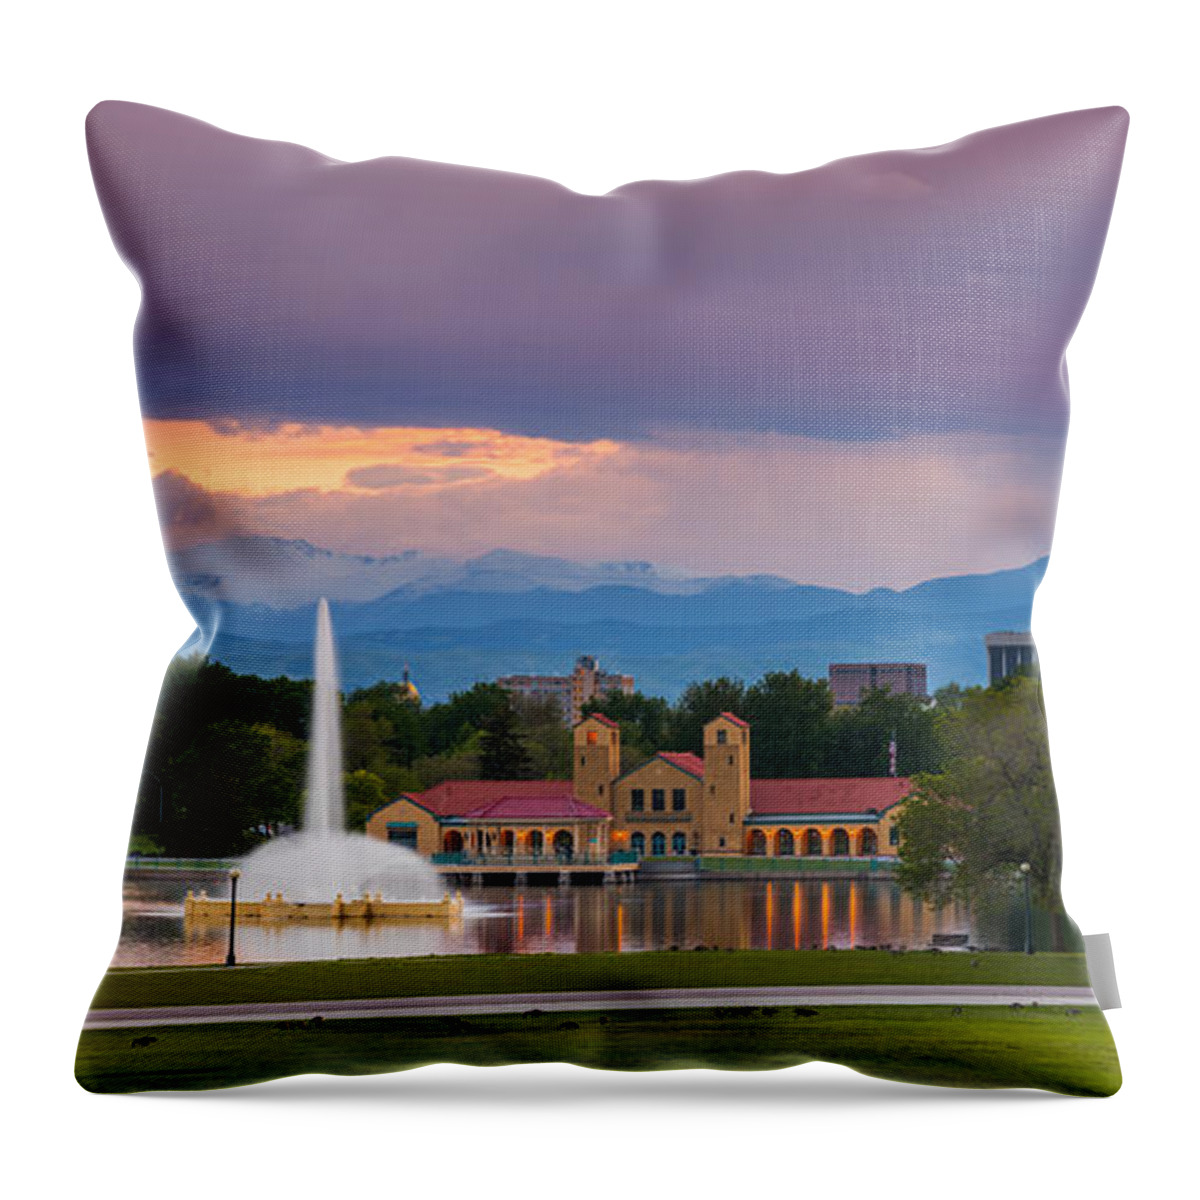 Denver Throw Pillow featuring the photograph City Park Sunset by Darren White